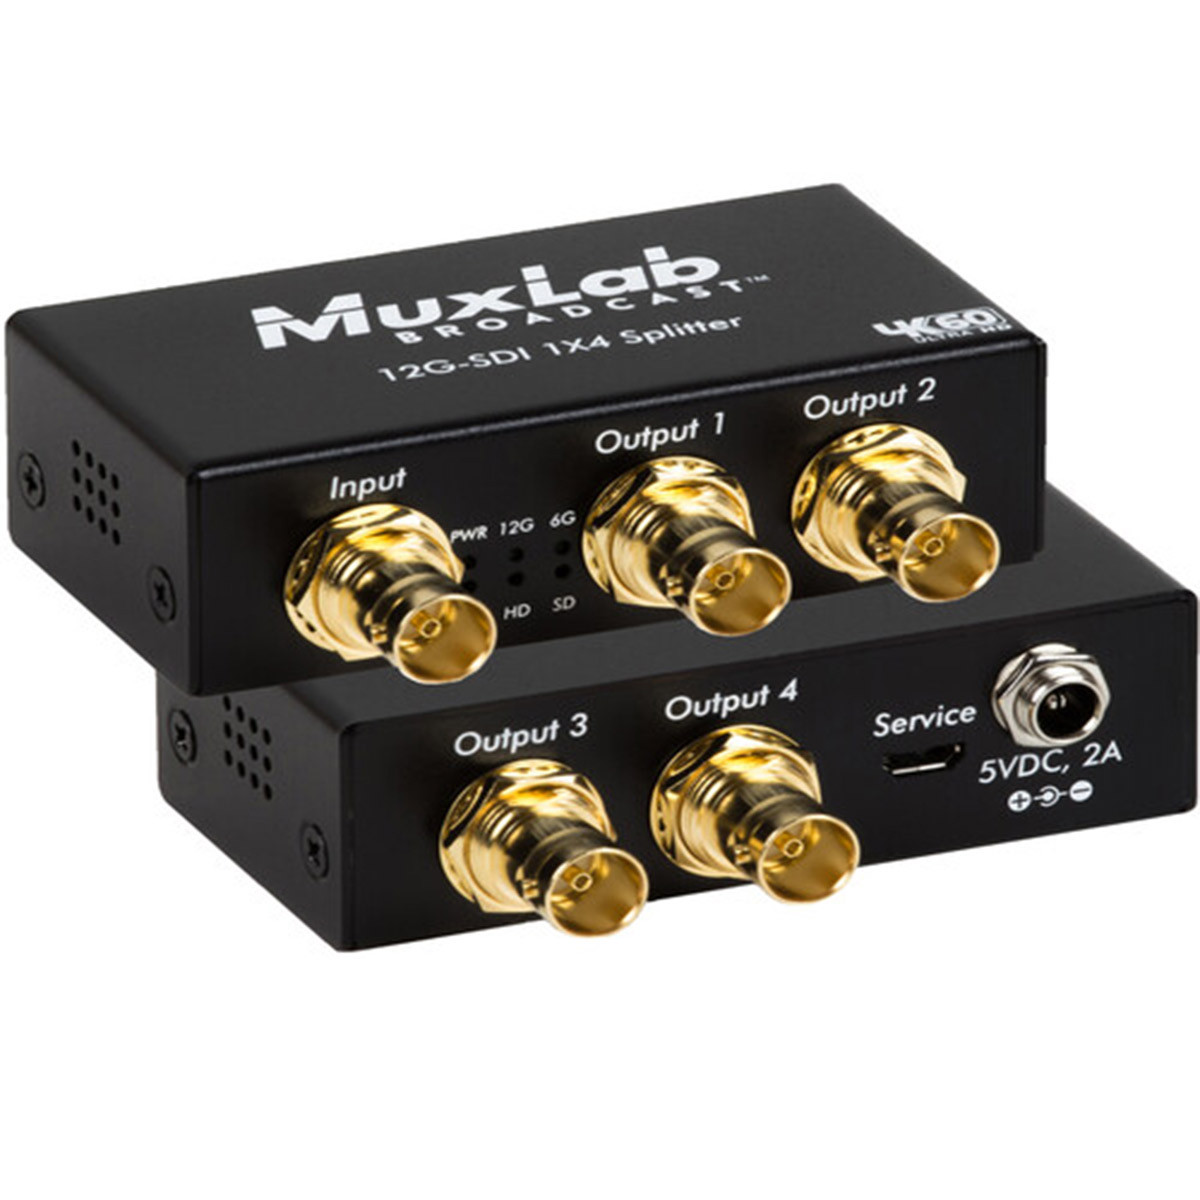 MUXLAB 500769-RM DIGITAL SIGNAGE MEDIA PLAYER Multi-format  video/image/audio, HDMI out, 4K/60